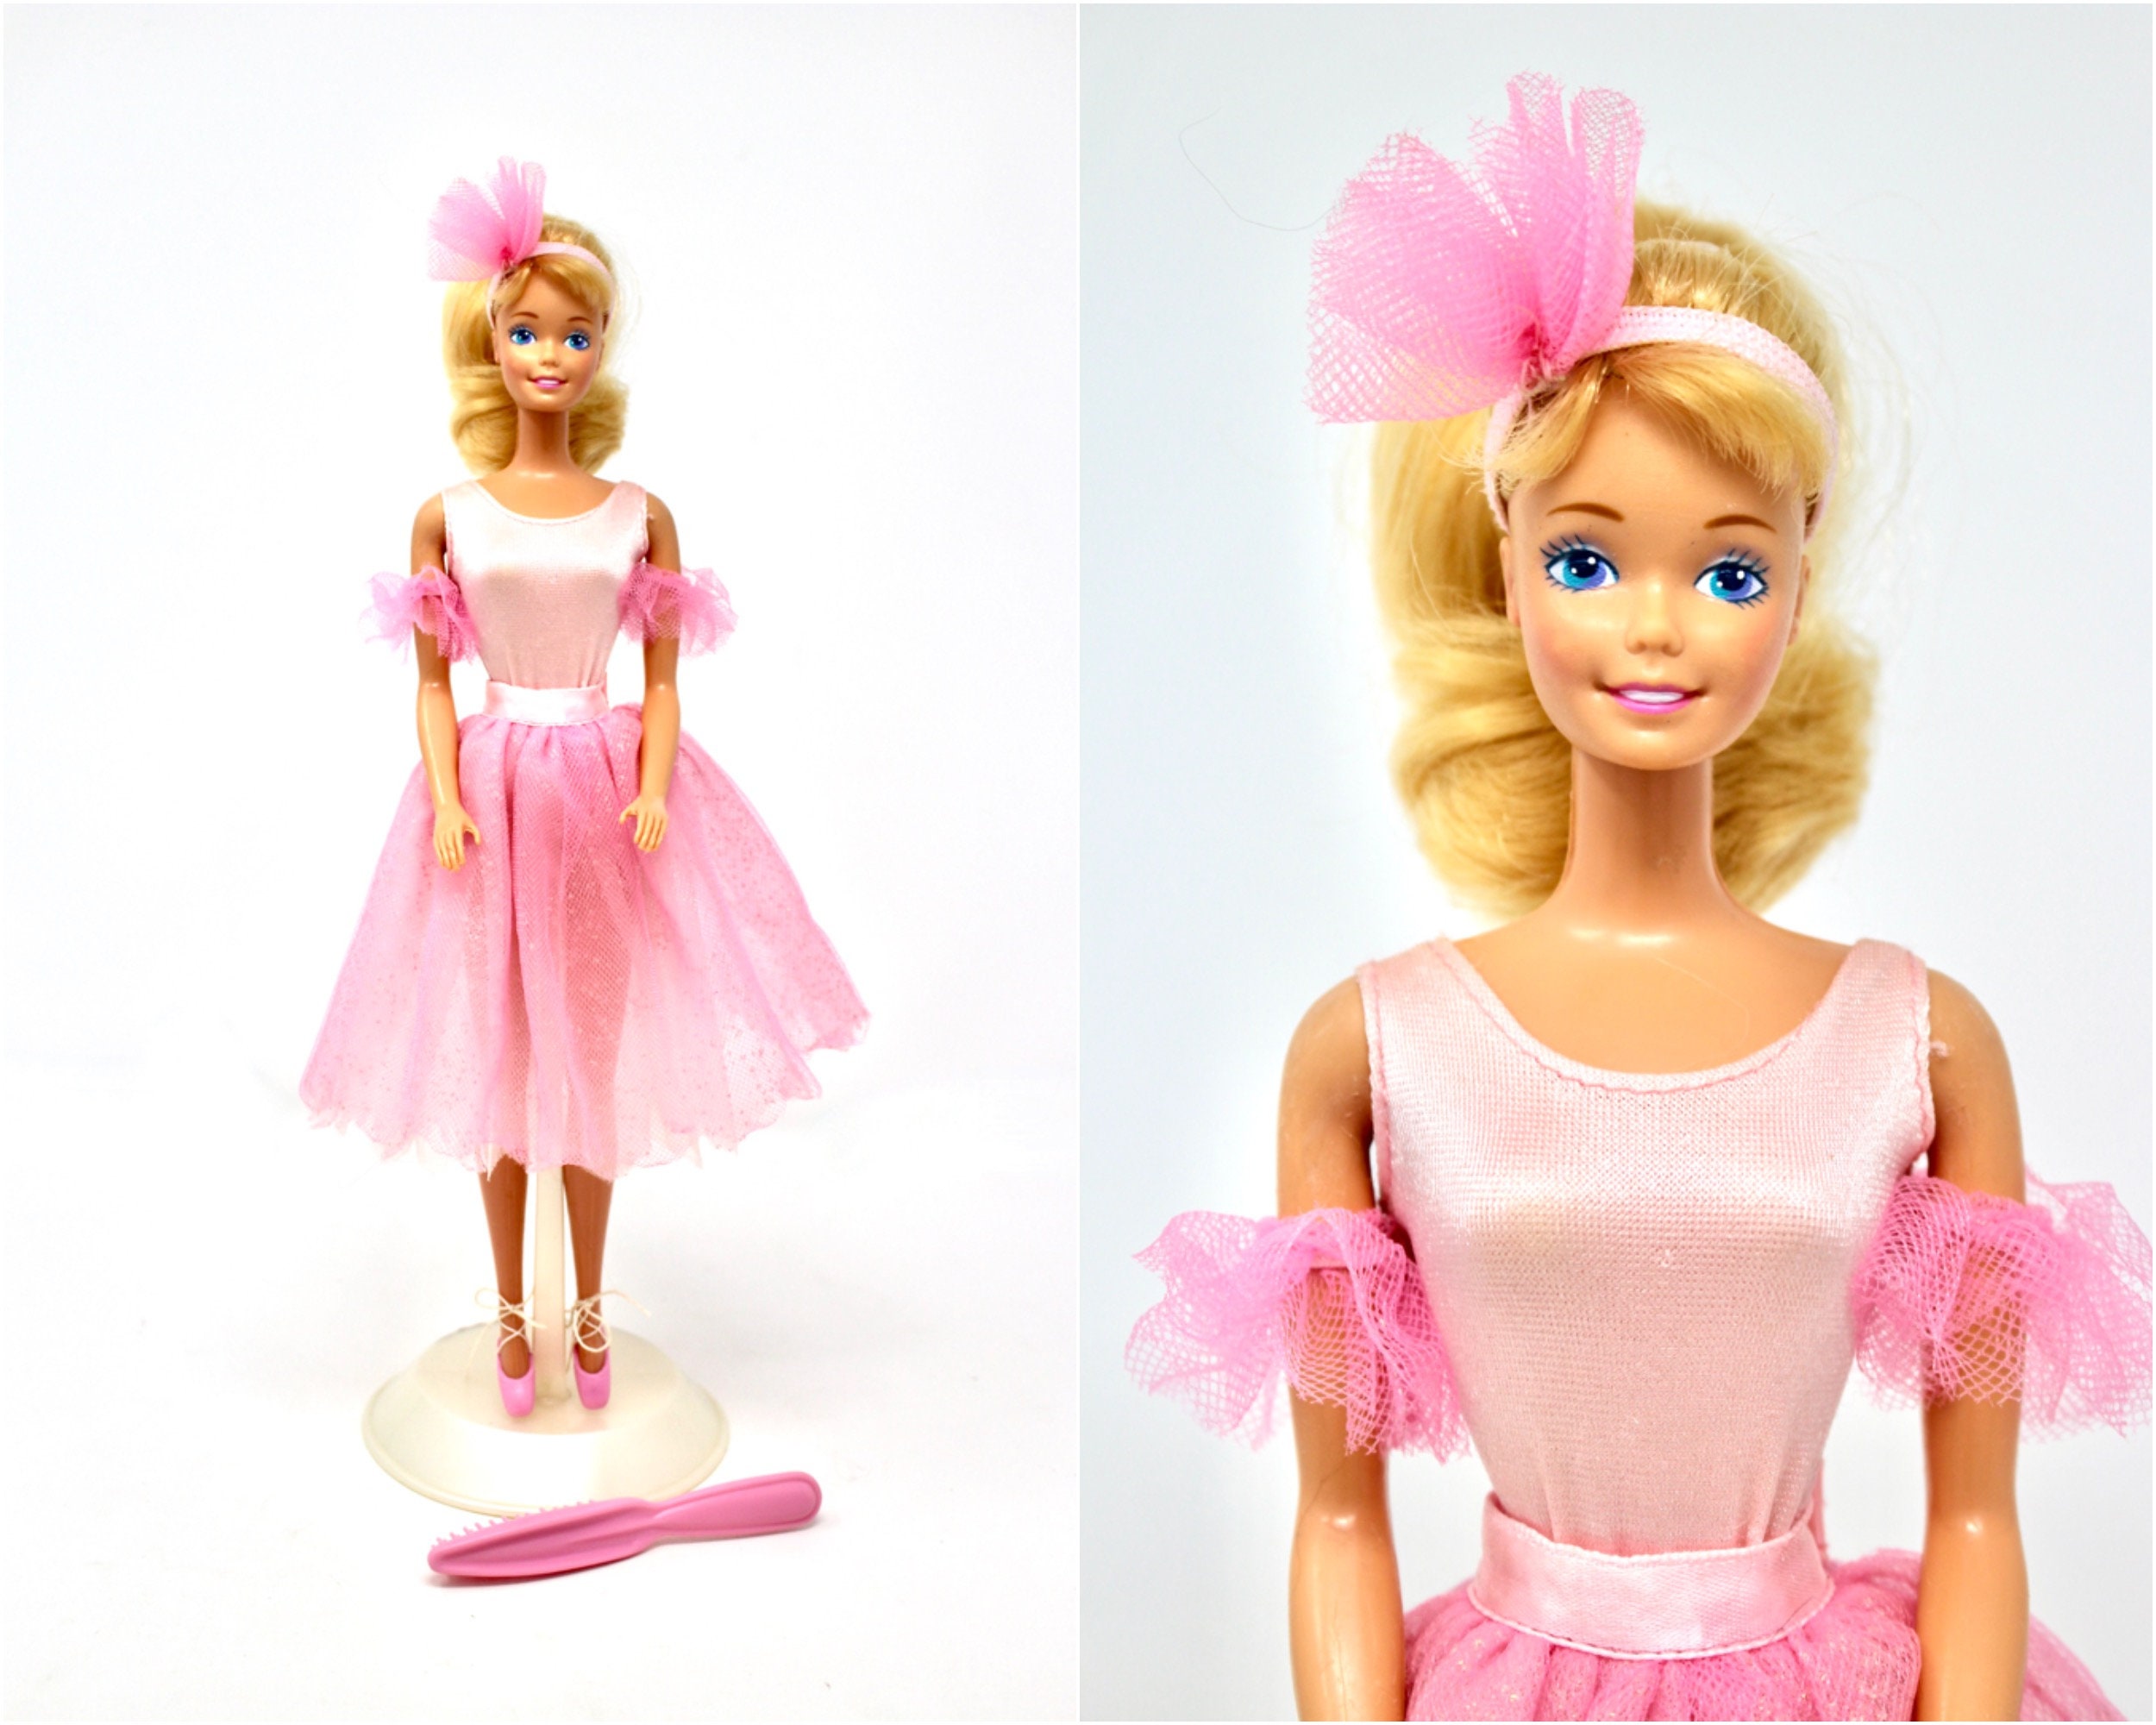 Barbie bailarina tutu rosa dreamtop Juguetes Don Dino